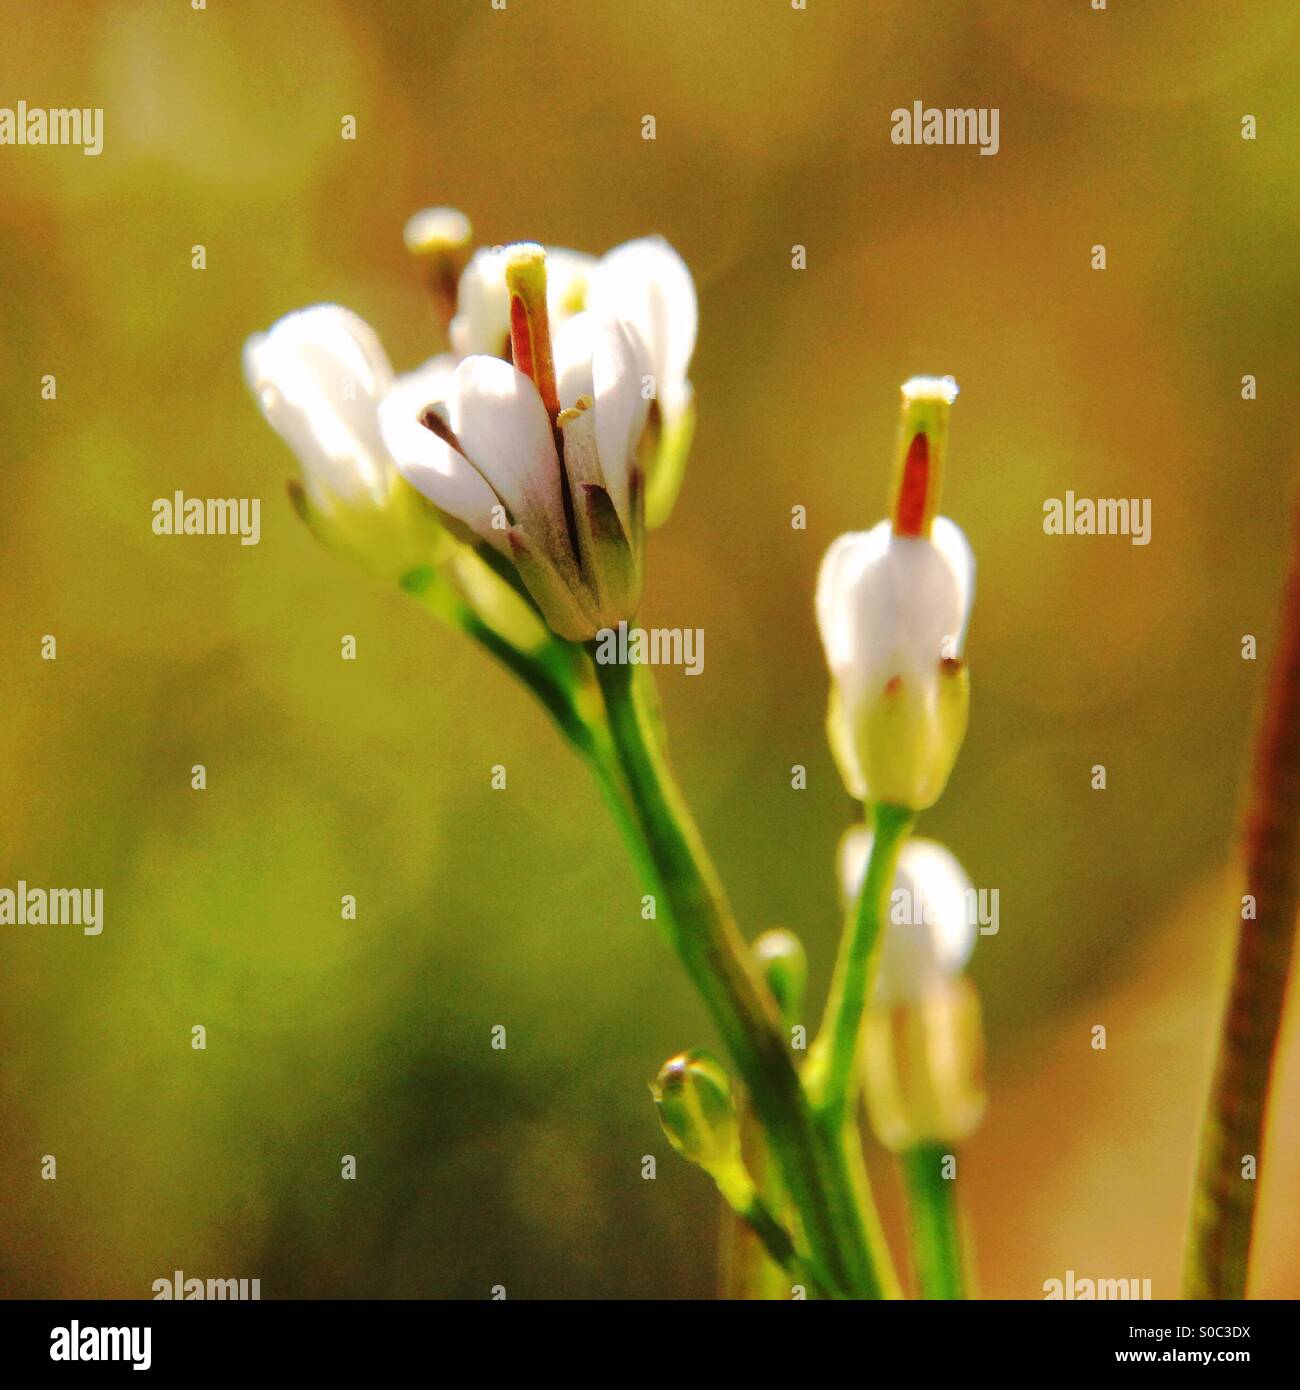 tiny-weed-flower-close-up-stock-photo-alamy